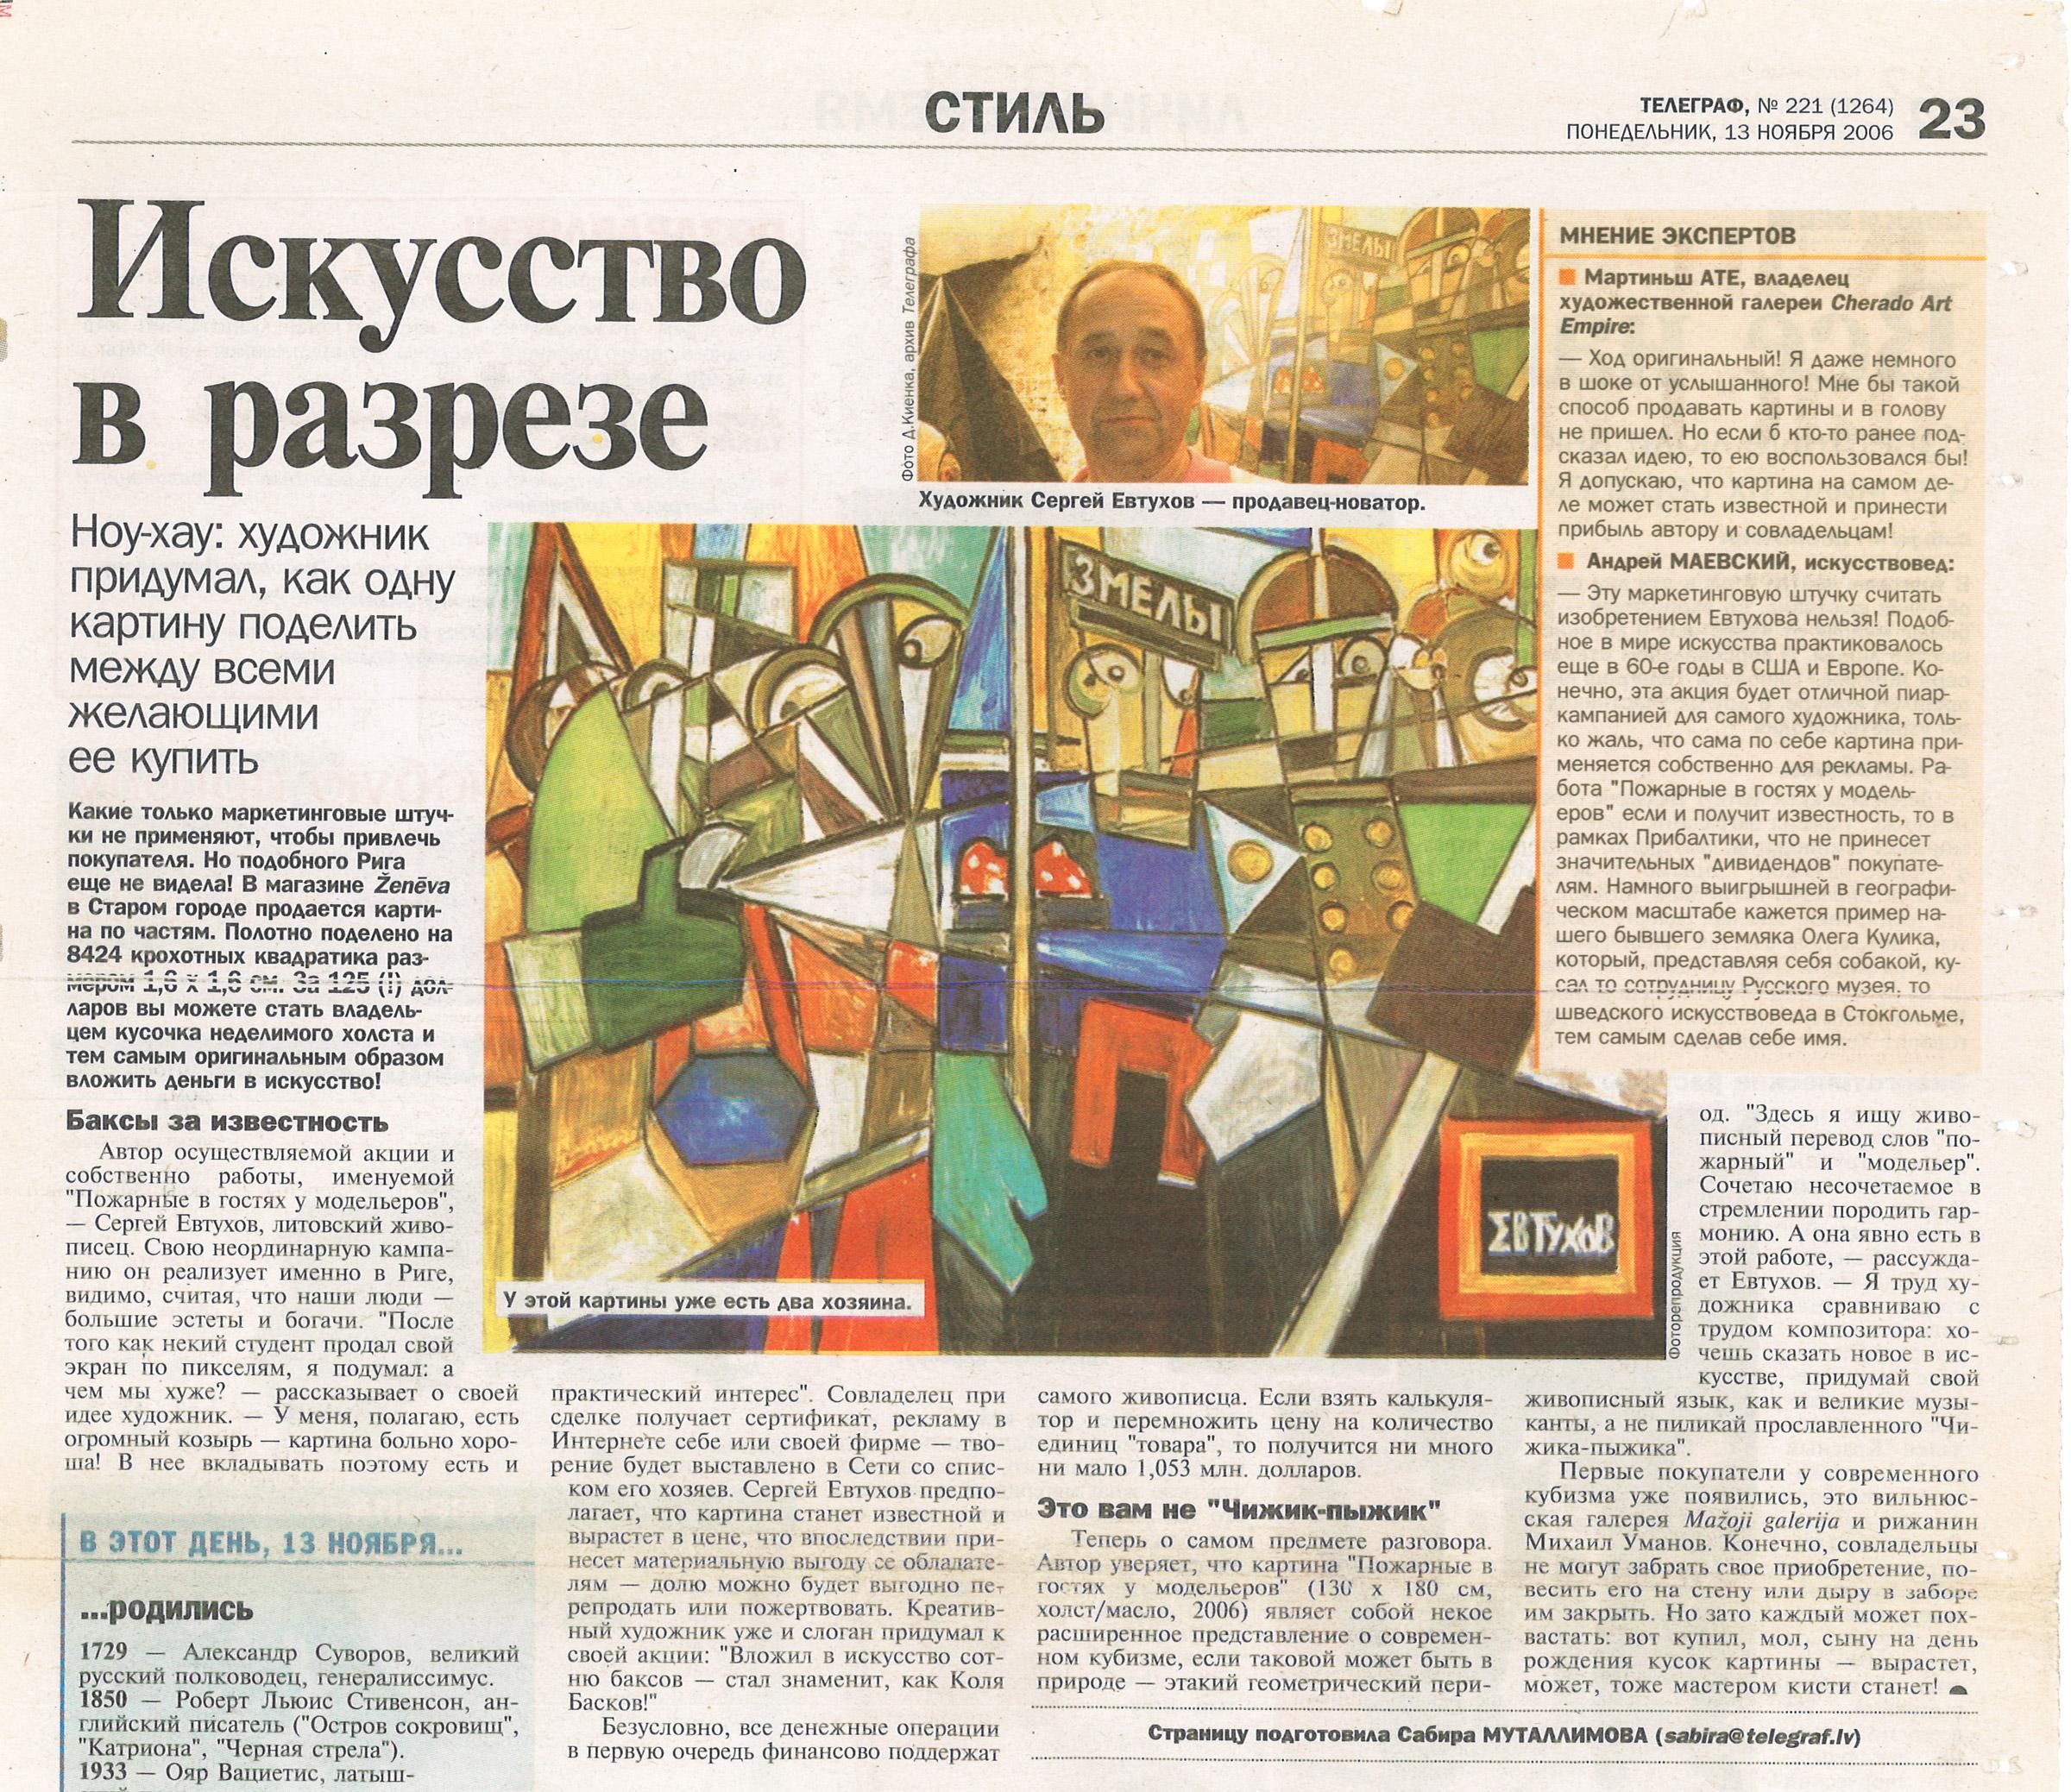 Article in the Riga newspaper<b>"Телеграф"</b>